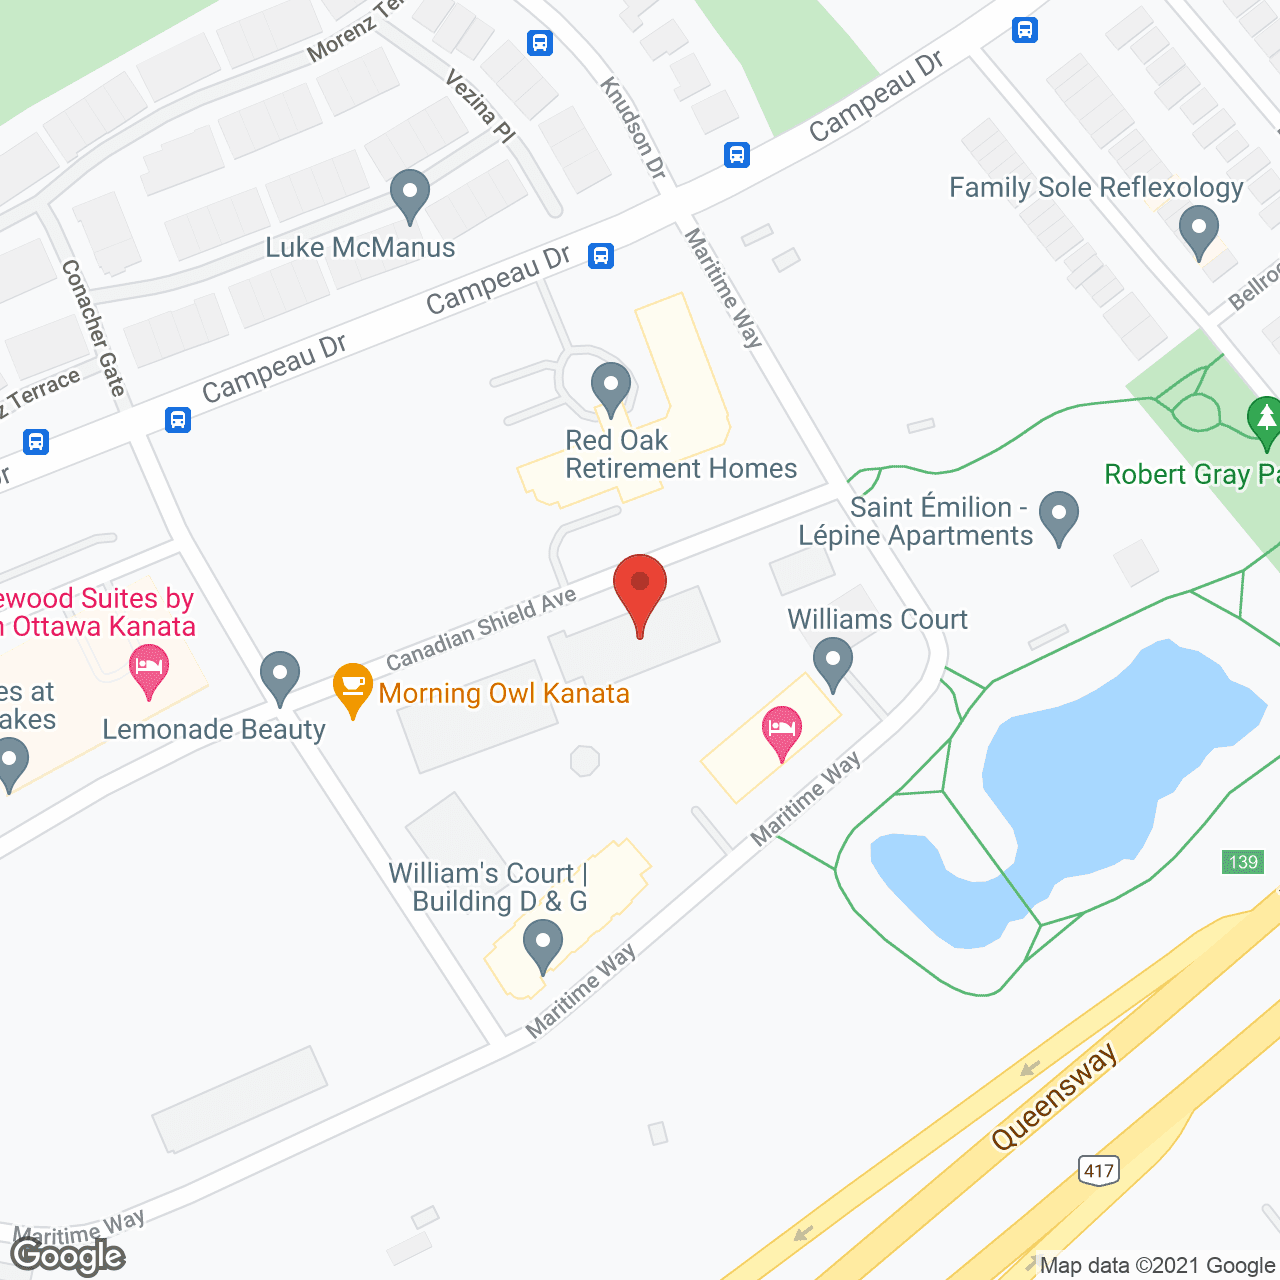 William's Court Building B in google map